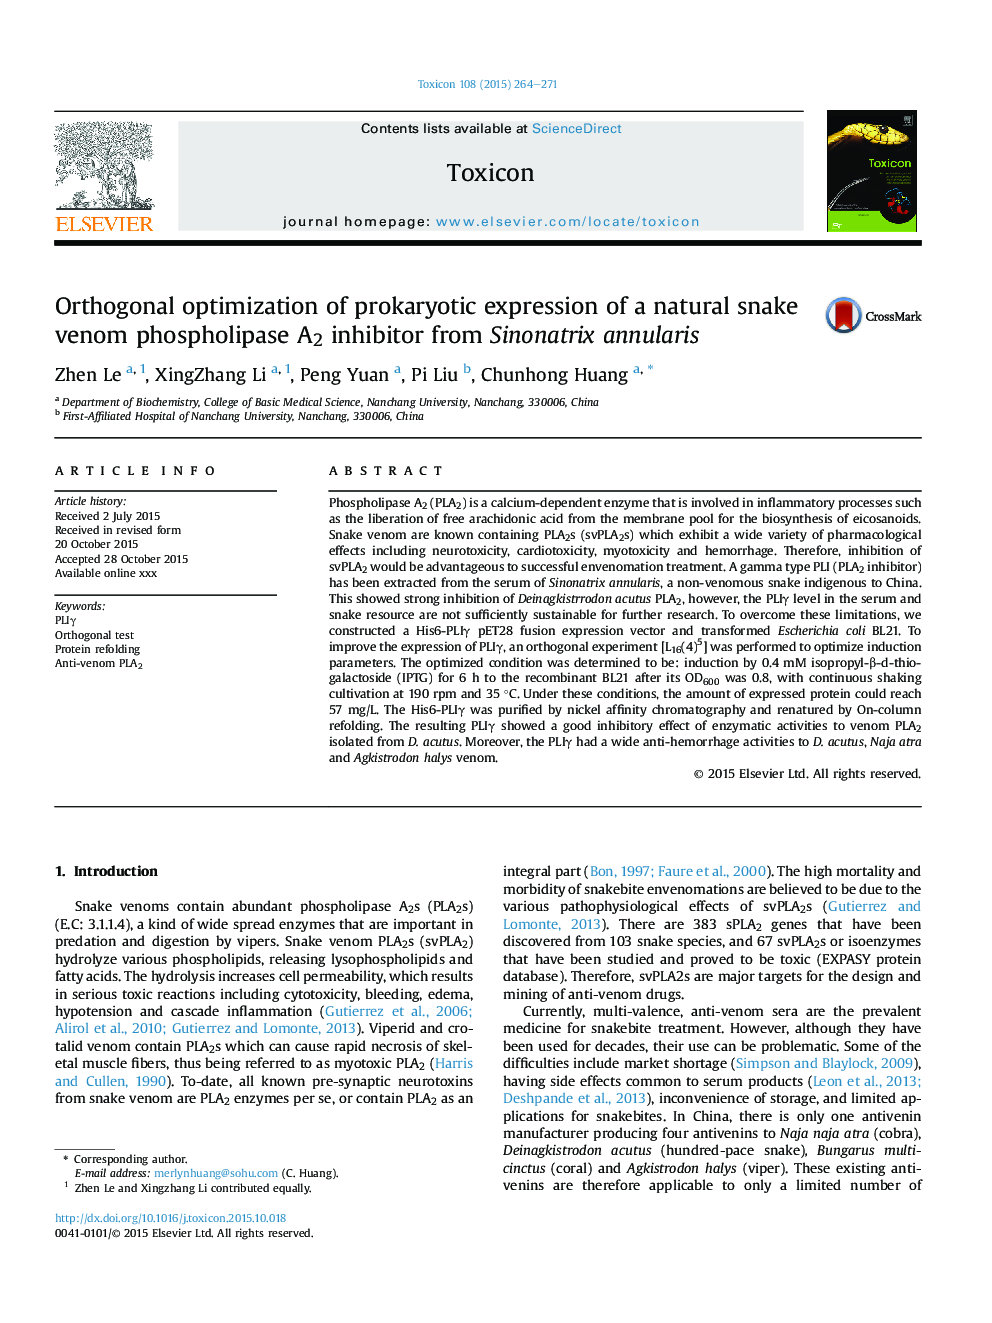 Orthogonal optimization of prokaryotic expression of a natural snake venom phospholipase A2 inhibitor from Sinonatrix annularis